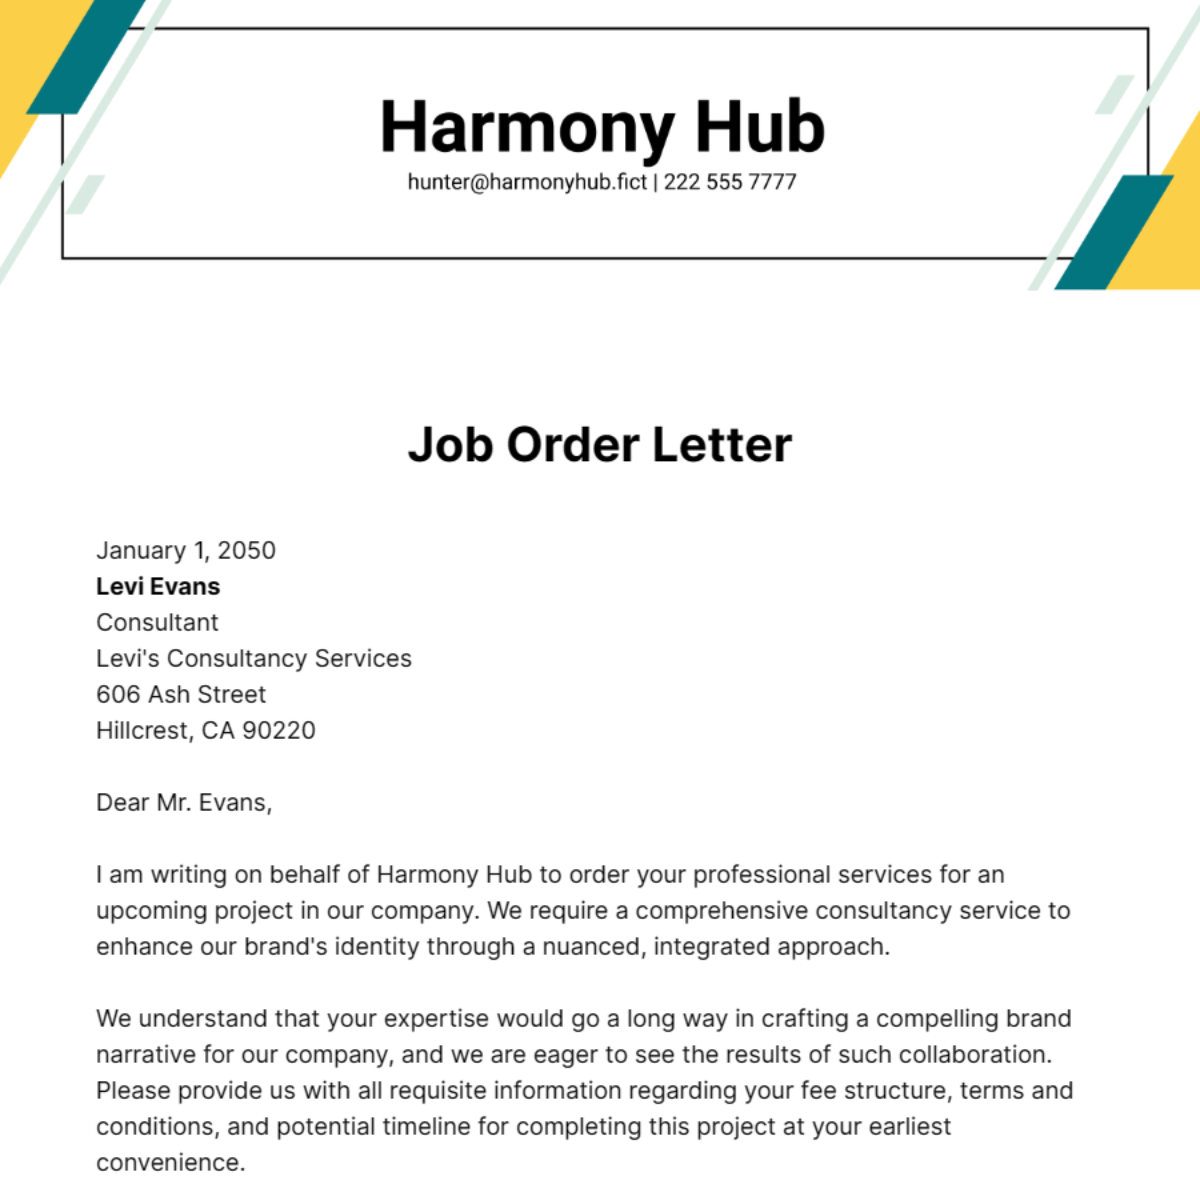 Job Order Letter Template